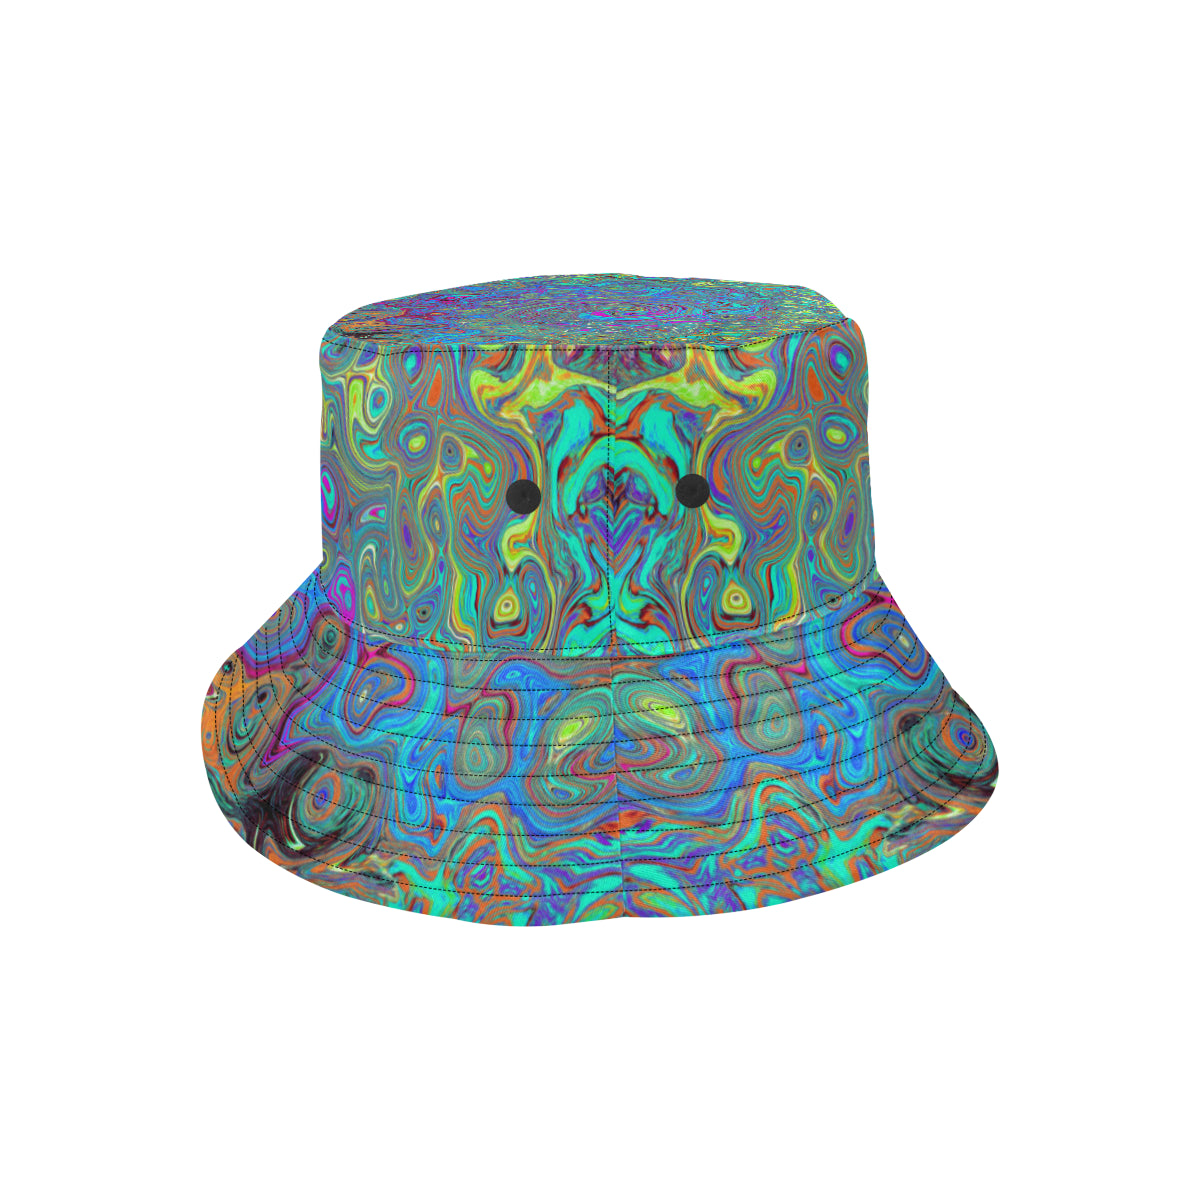 Bucket Hats, Magenta, Blue and Sea Foam Green Retro Swirl